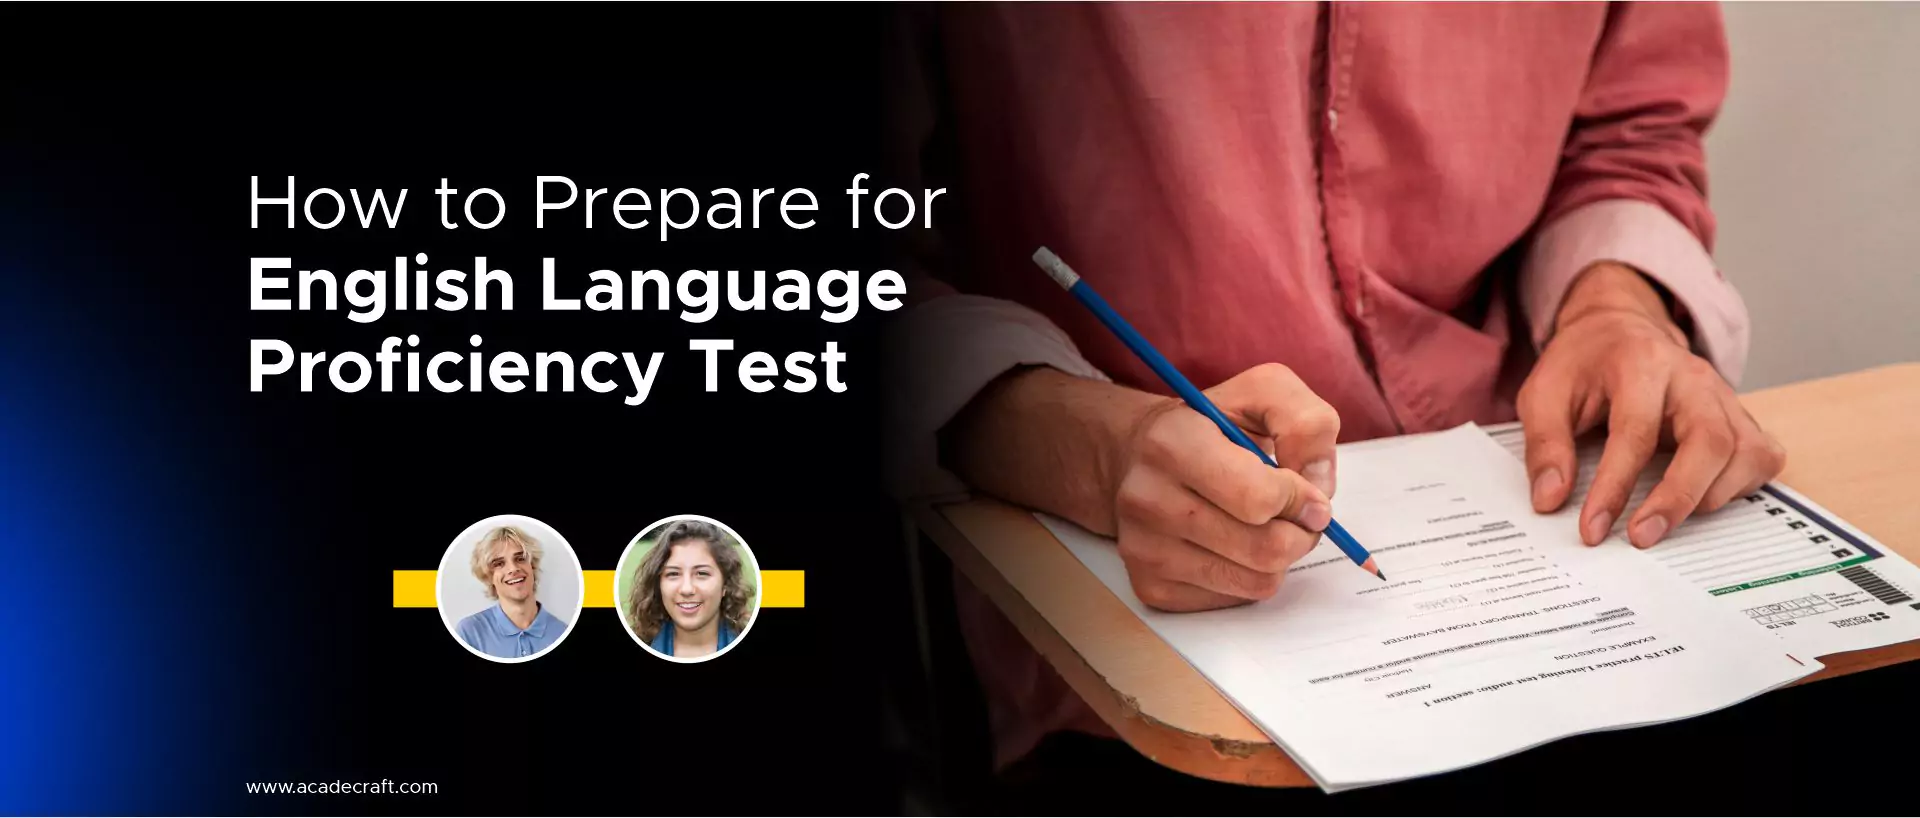 Preparing for English Language Proficiency Test: Key Steps for Success